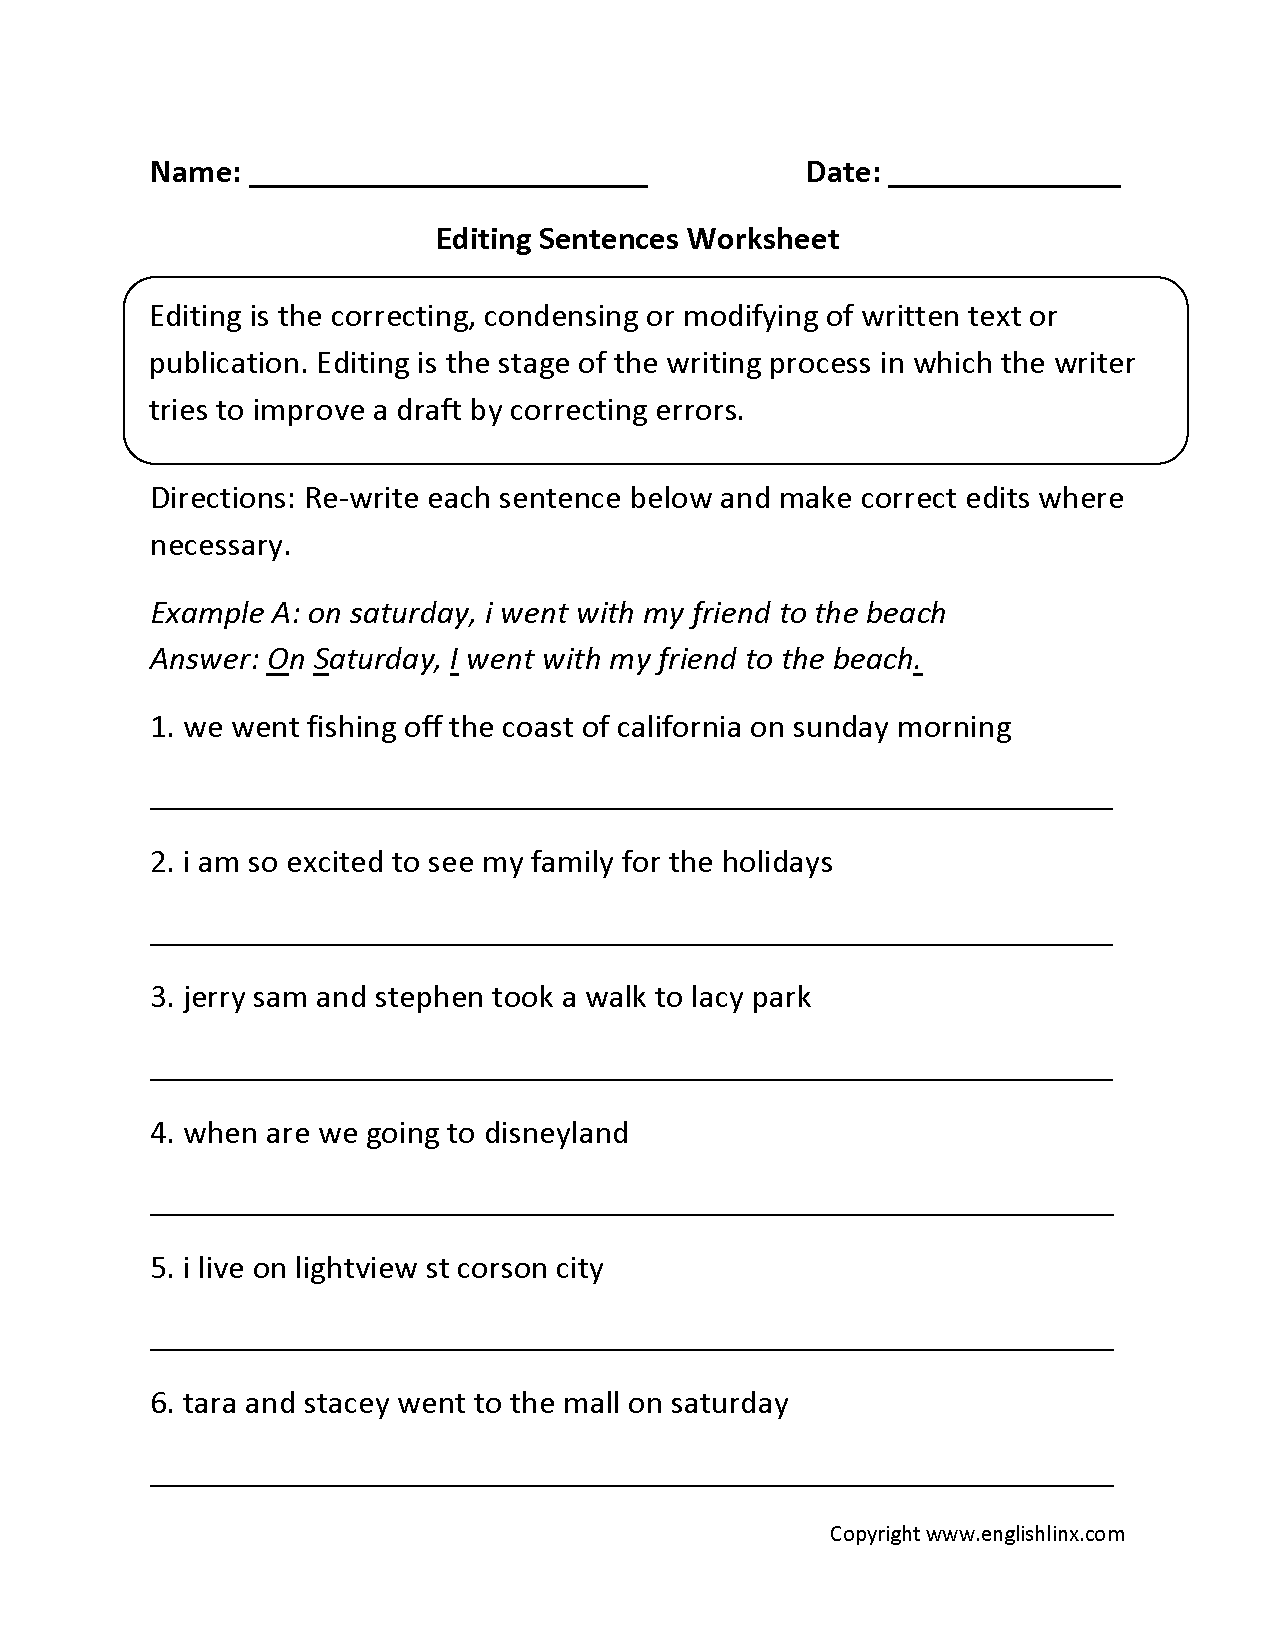 writing-sentences-ks1-worksheets-worksheet-resume-examples